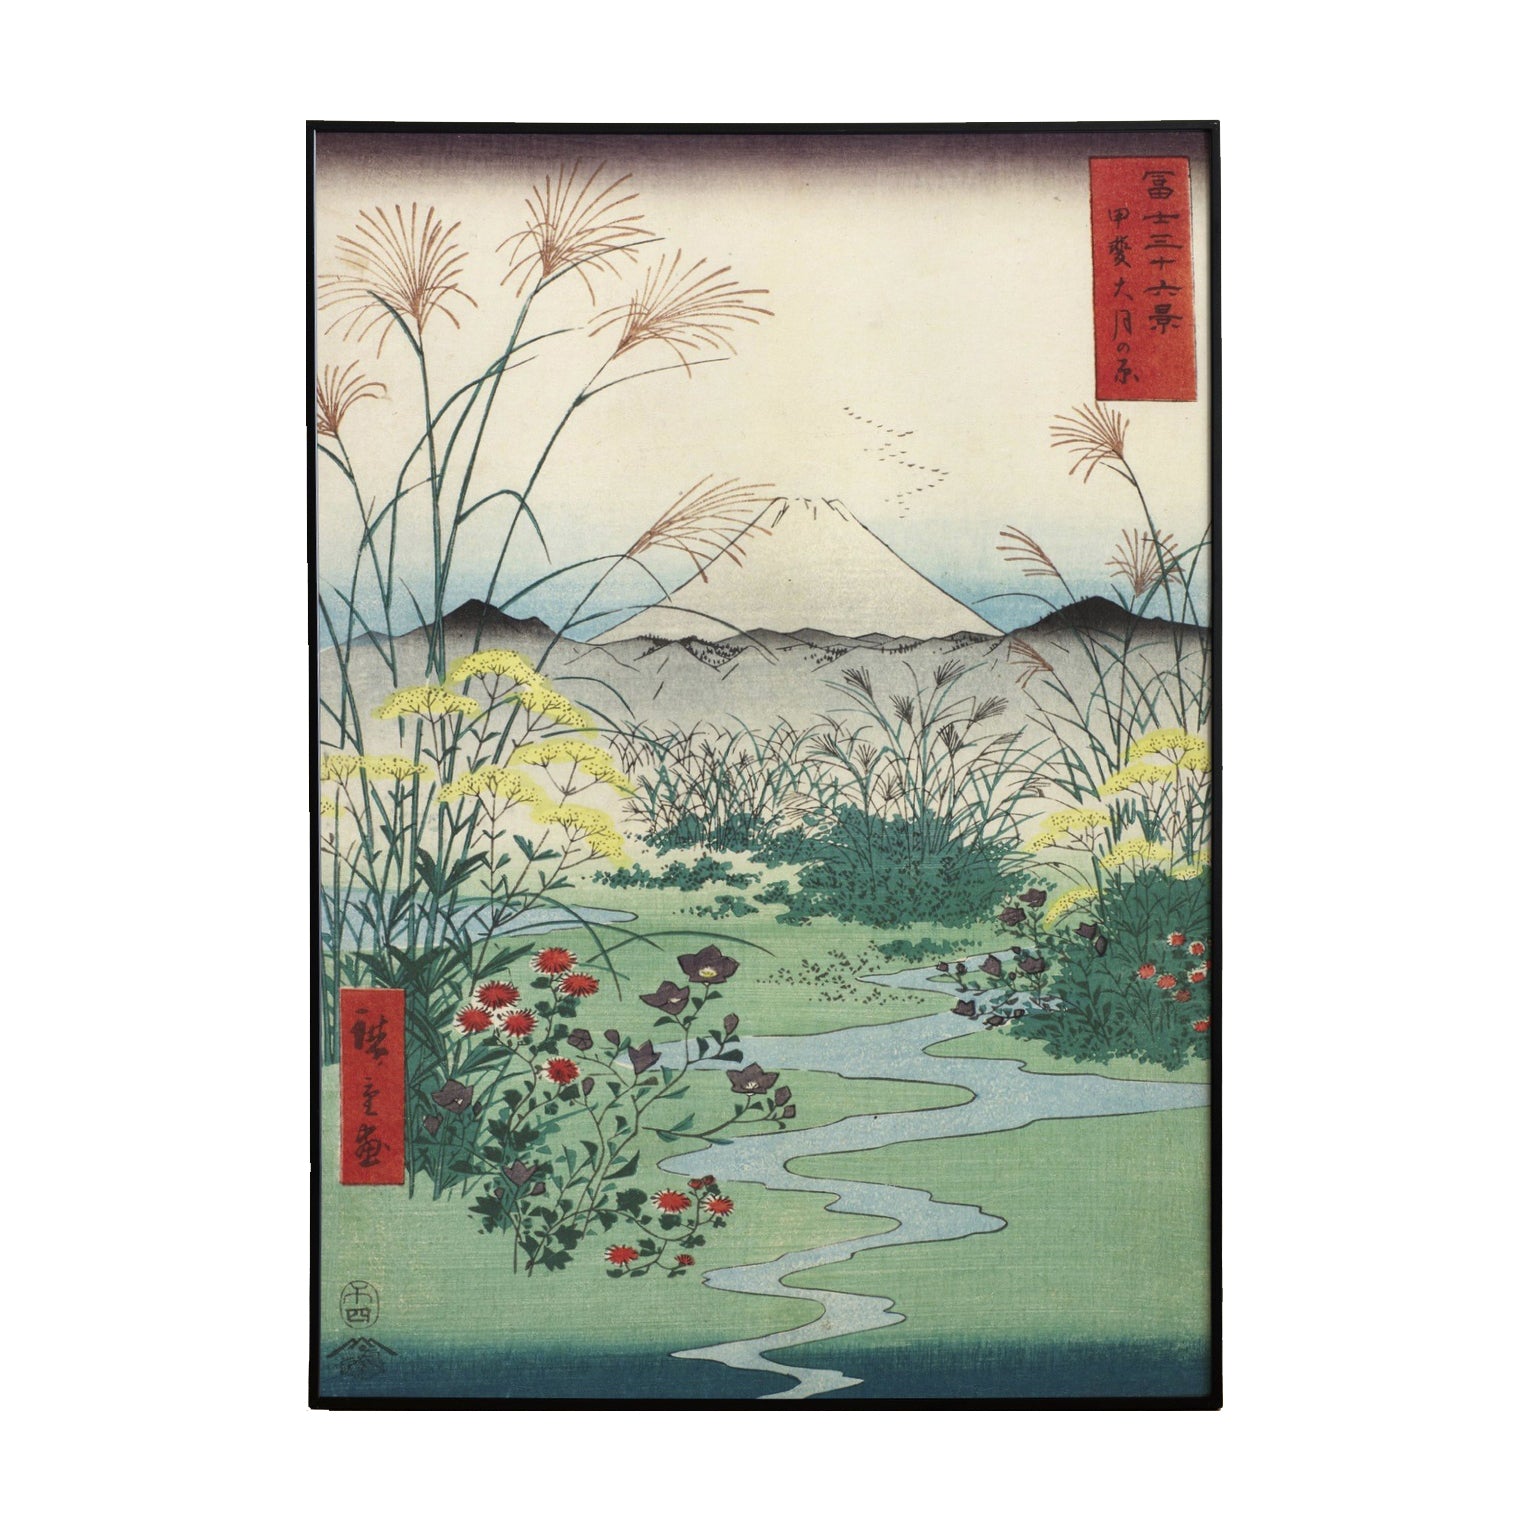 Otsukinohara in the Province of Kai, by Utagawa Hiroshige - The Mousepad Company